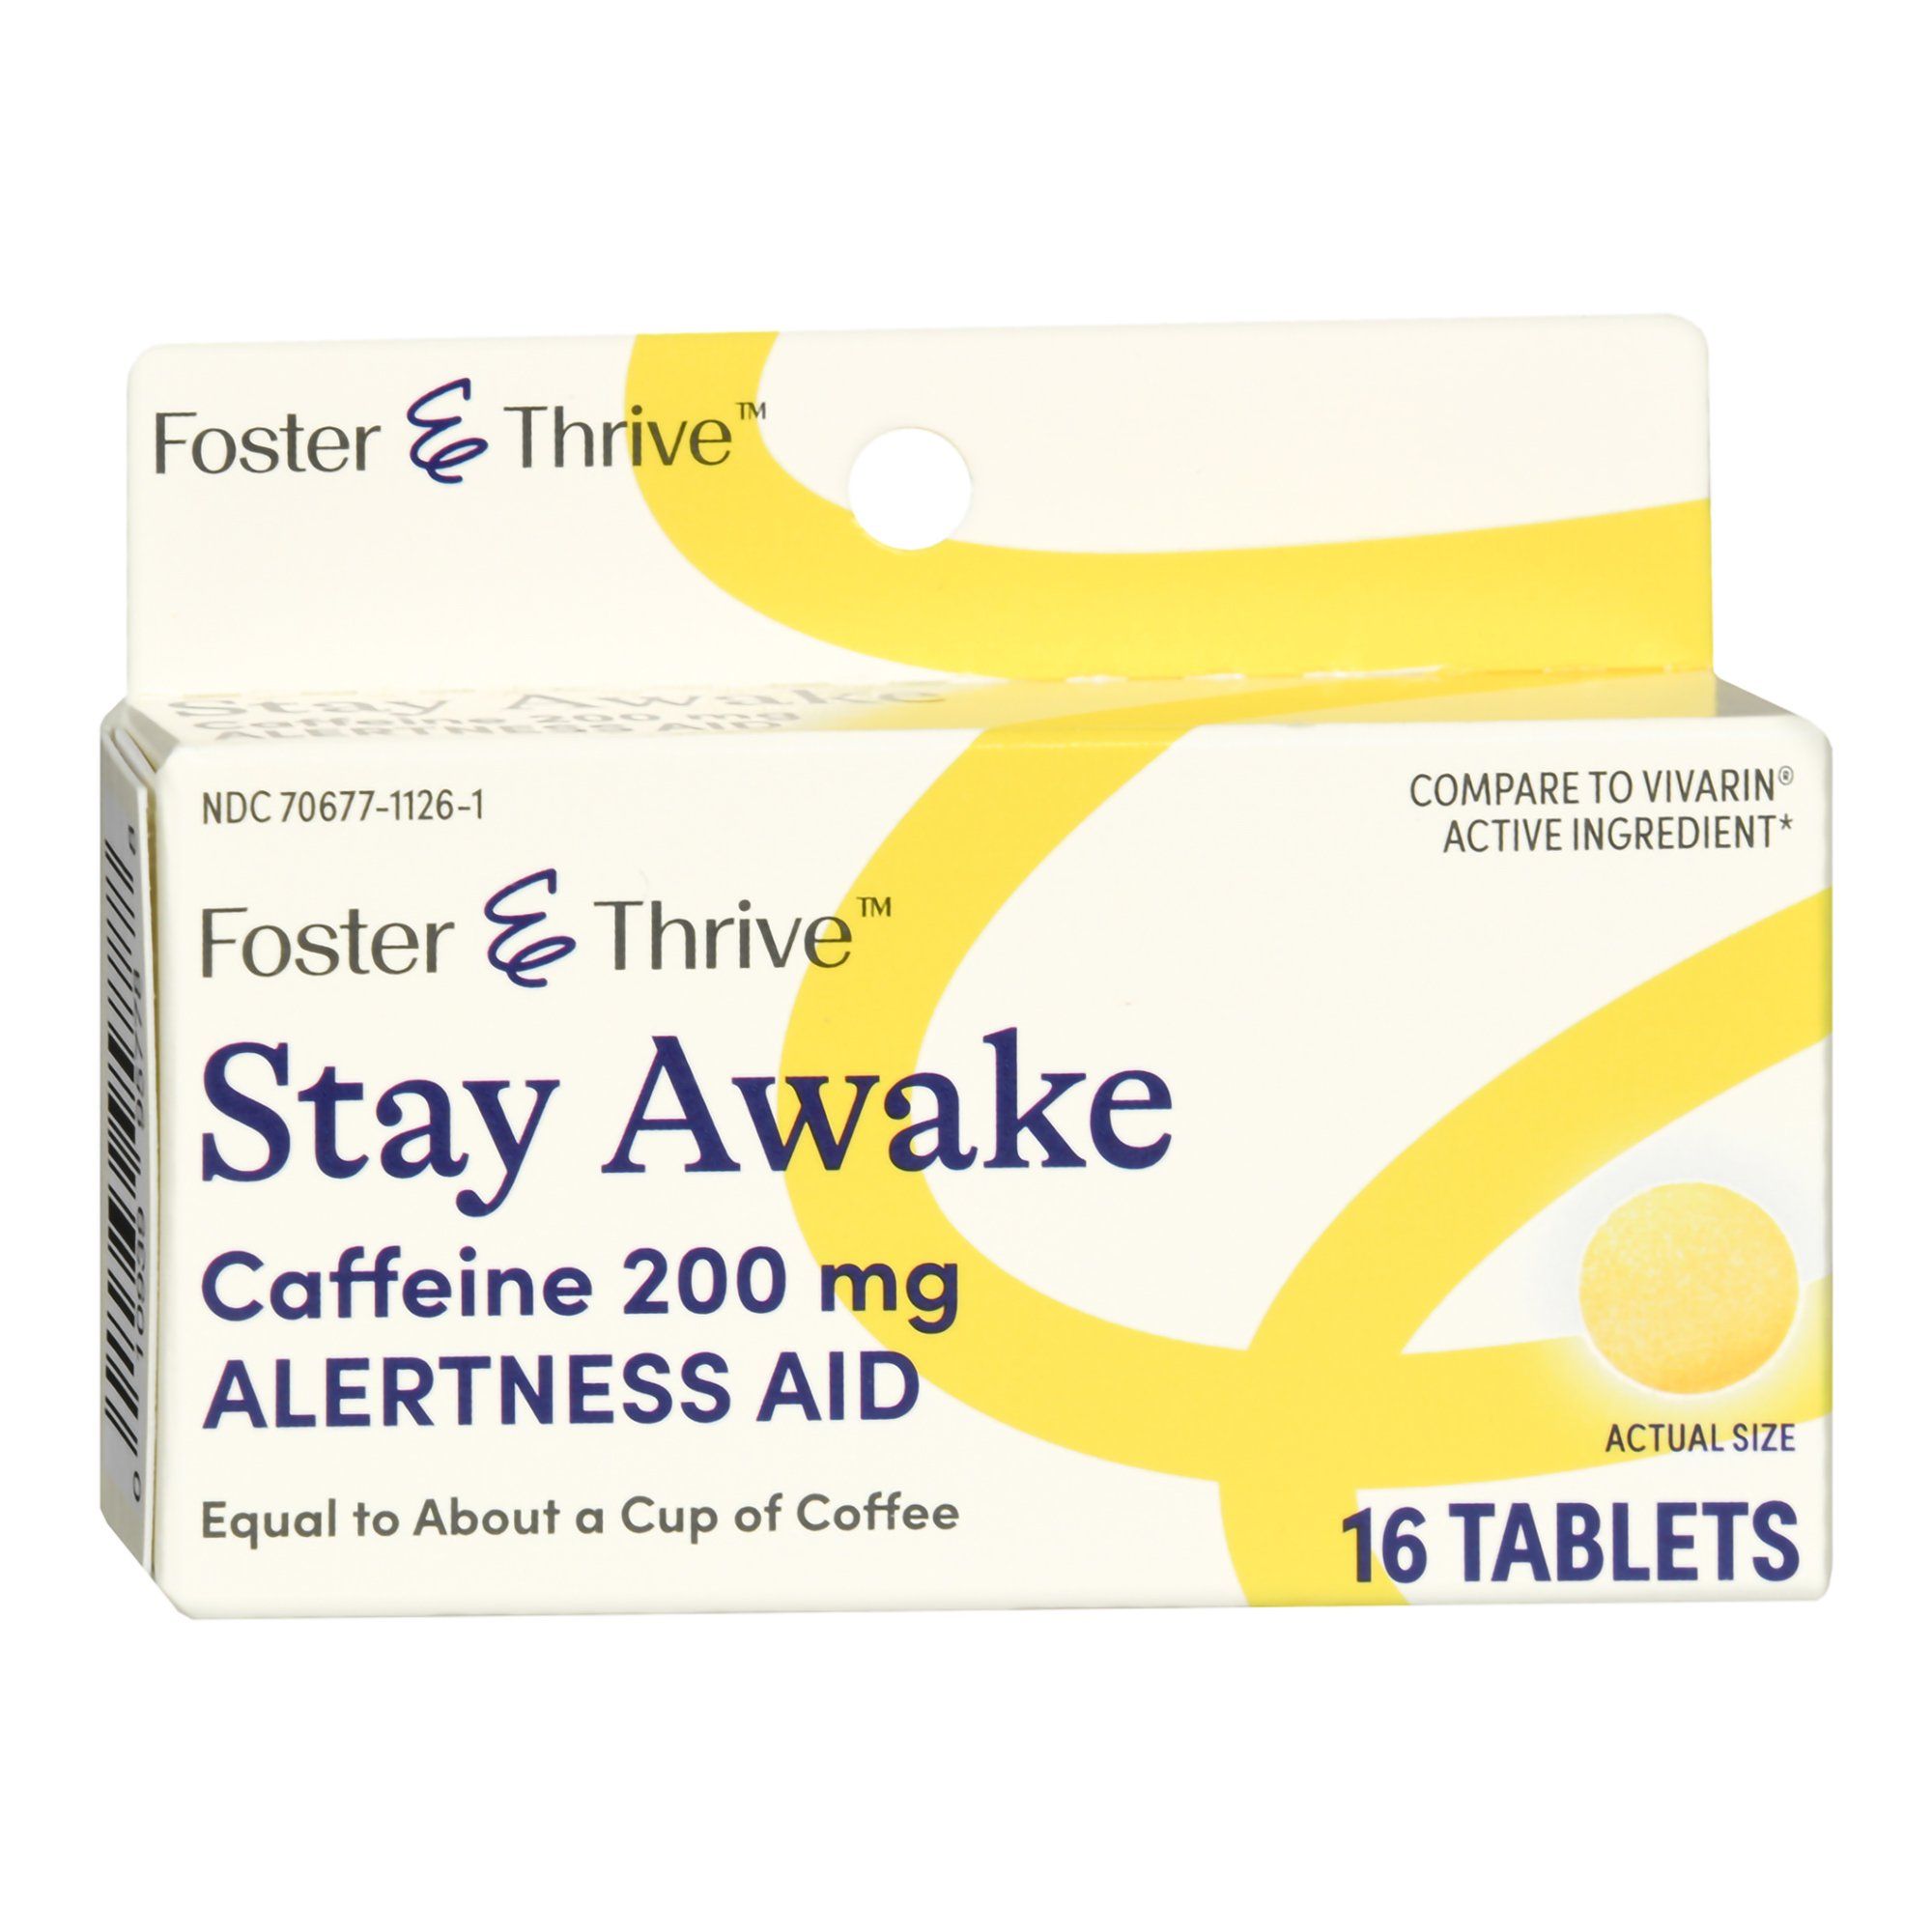 Foster & Thrive Stay Awake Caffeine Tablets, 200 mg - 16 ct